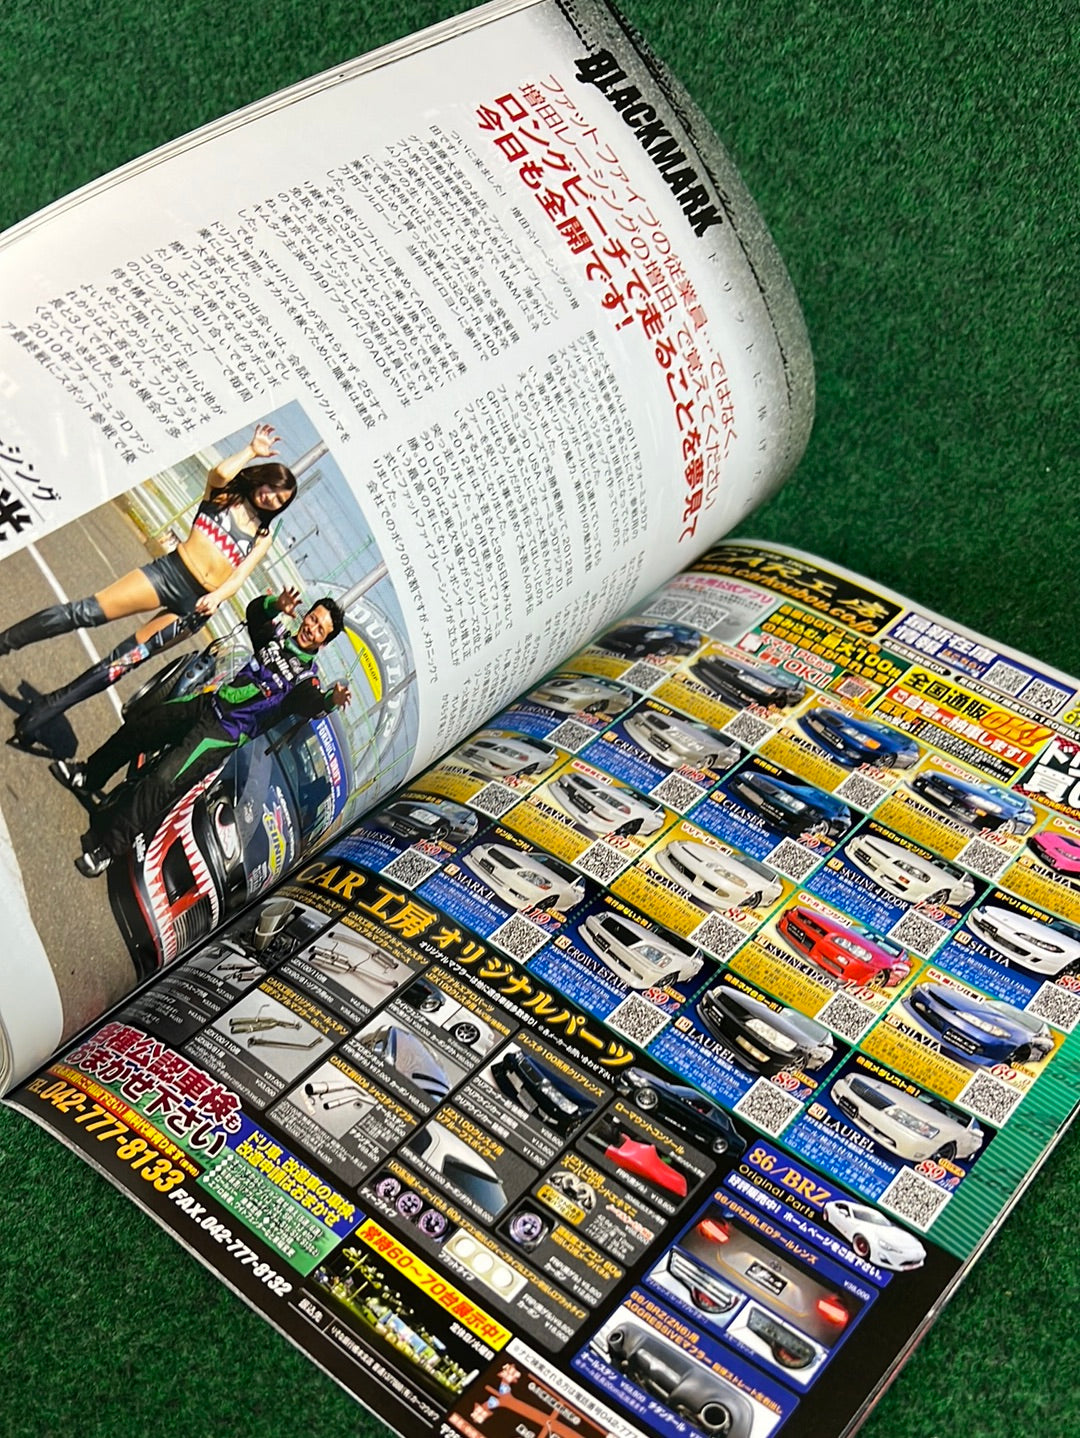 Drift Tengoku Magazine - April 2016